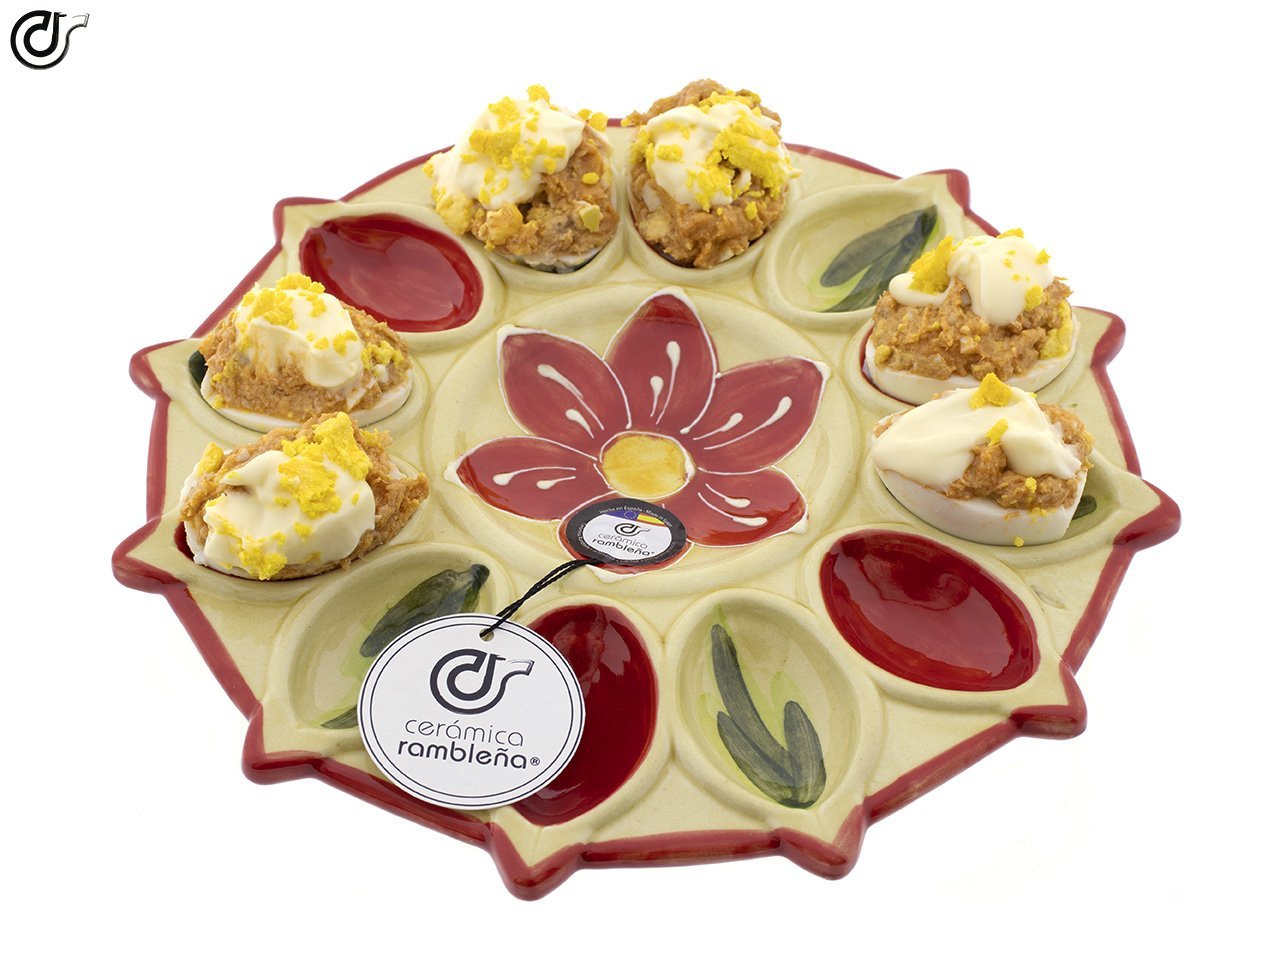 Plato para servir huevos rellenos de flores de primavera de China georgiana  fabricado en Estados Unidos. -  España